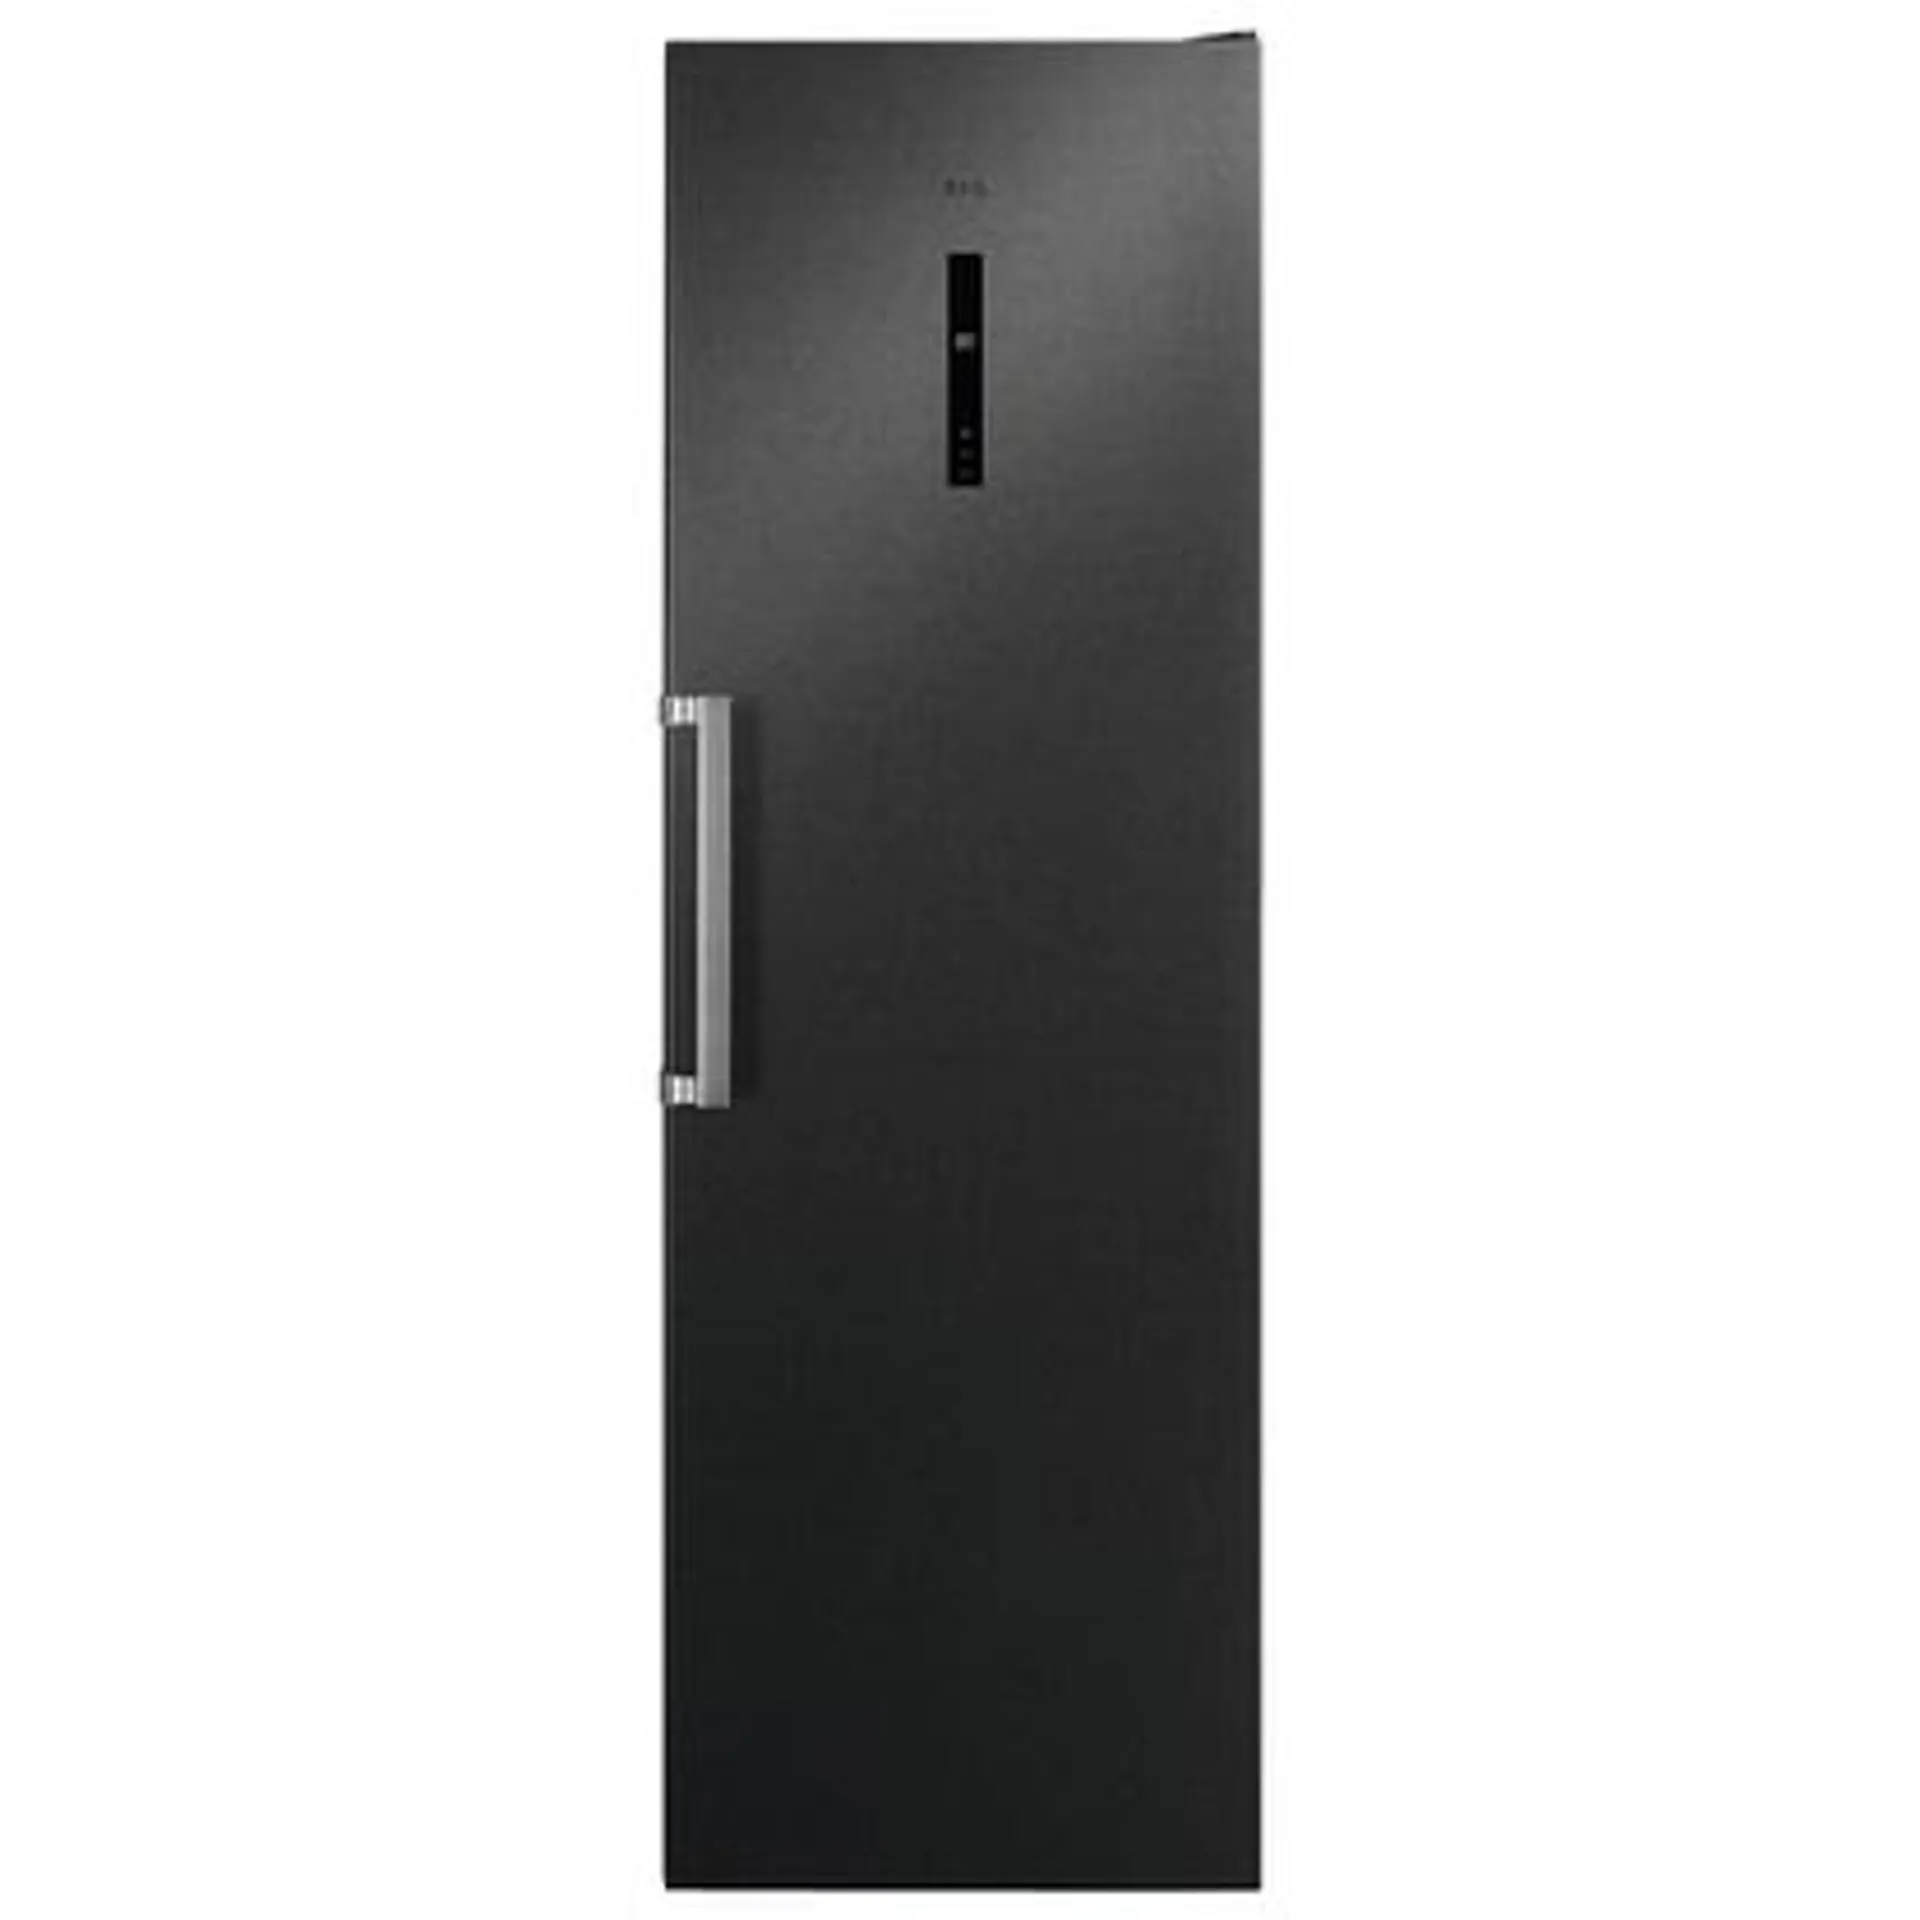 AEG AGB728E5NB 60cm Freestanding Frost Free Freezer – BLACK STEEL